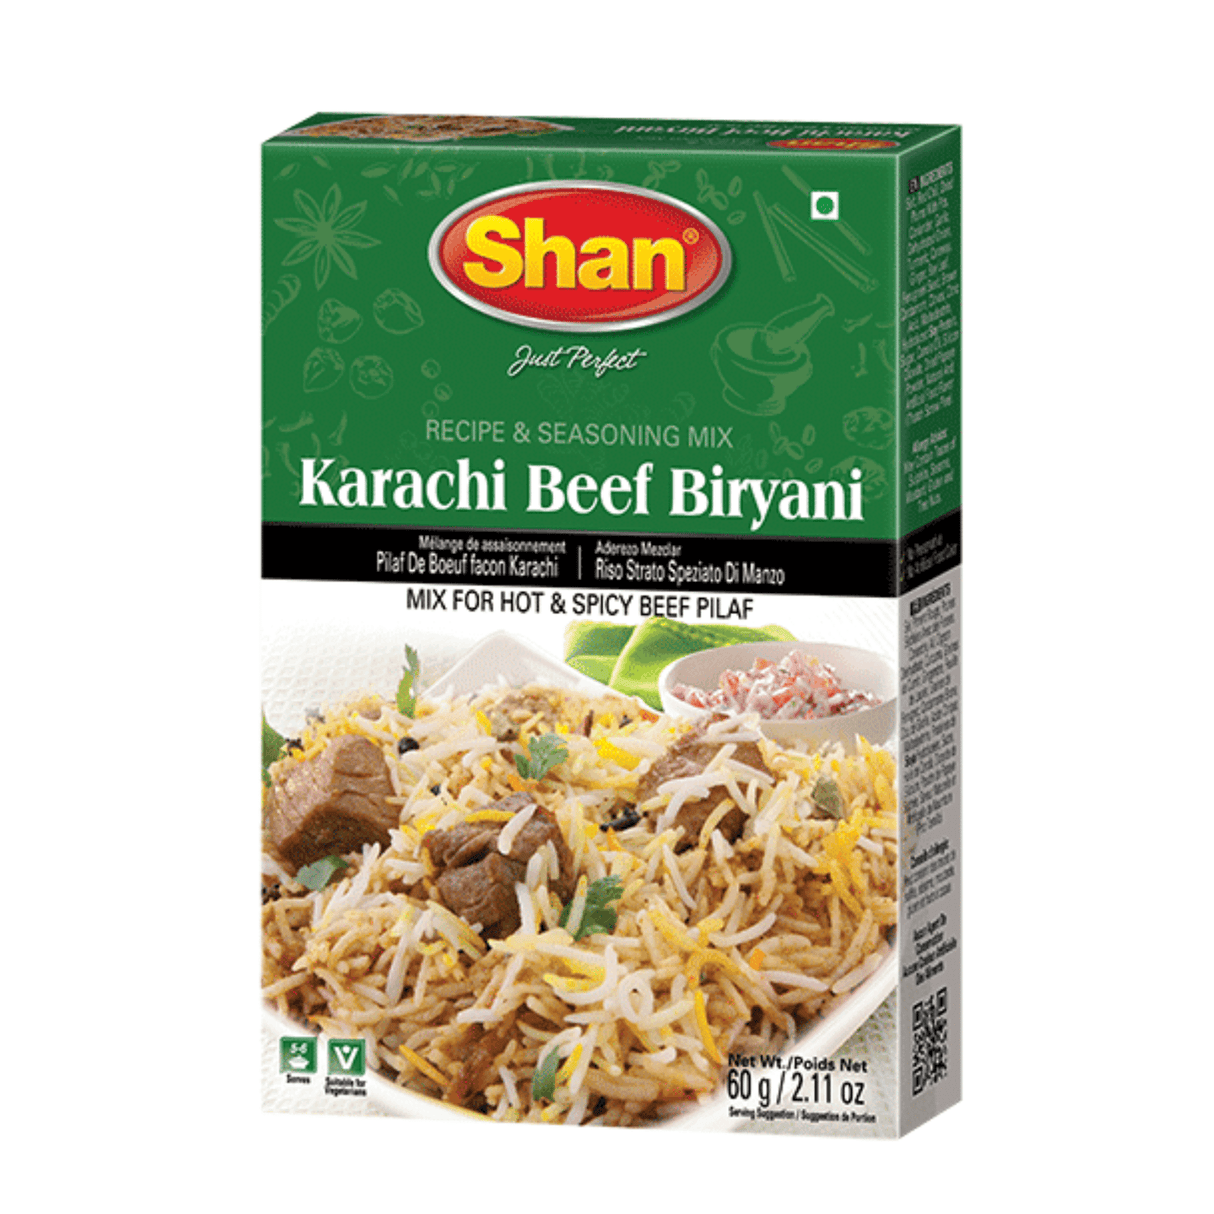 Shan Karachi Beef Biryani